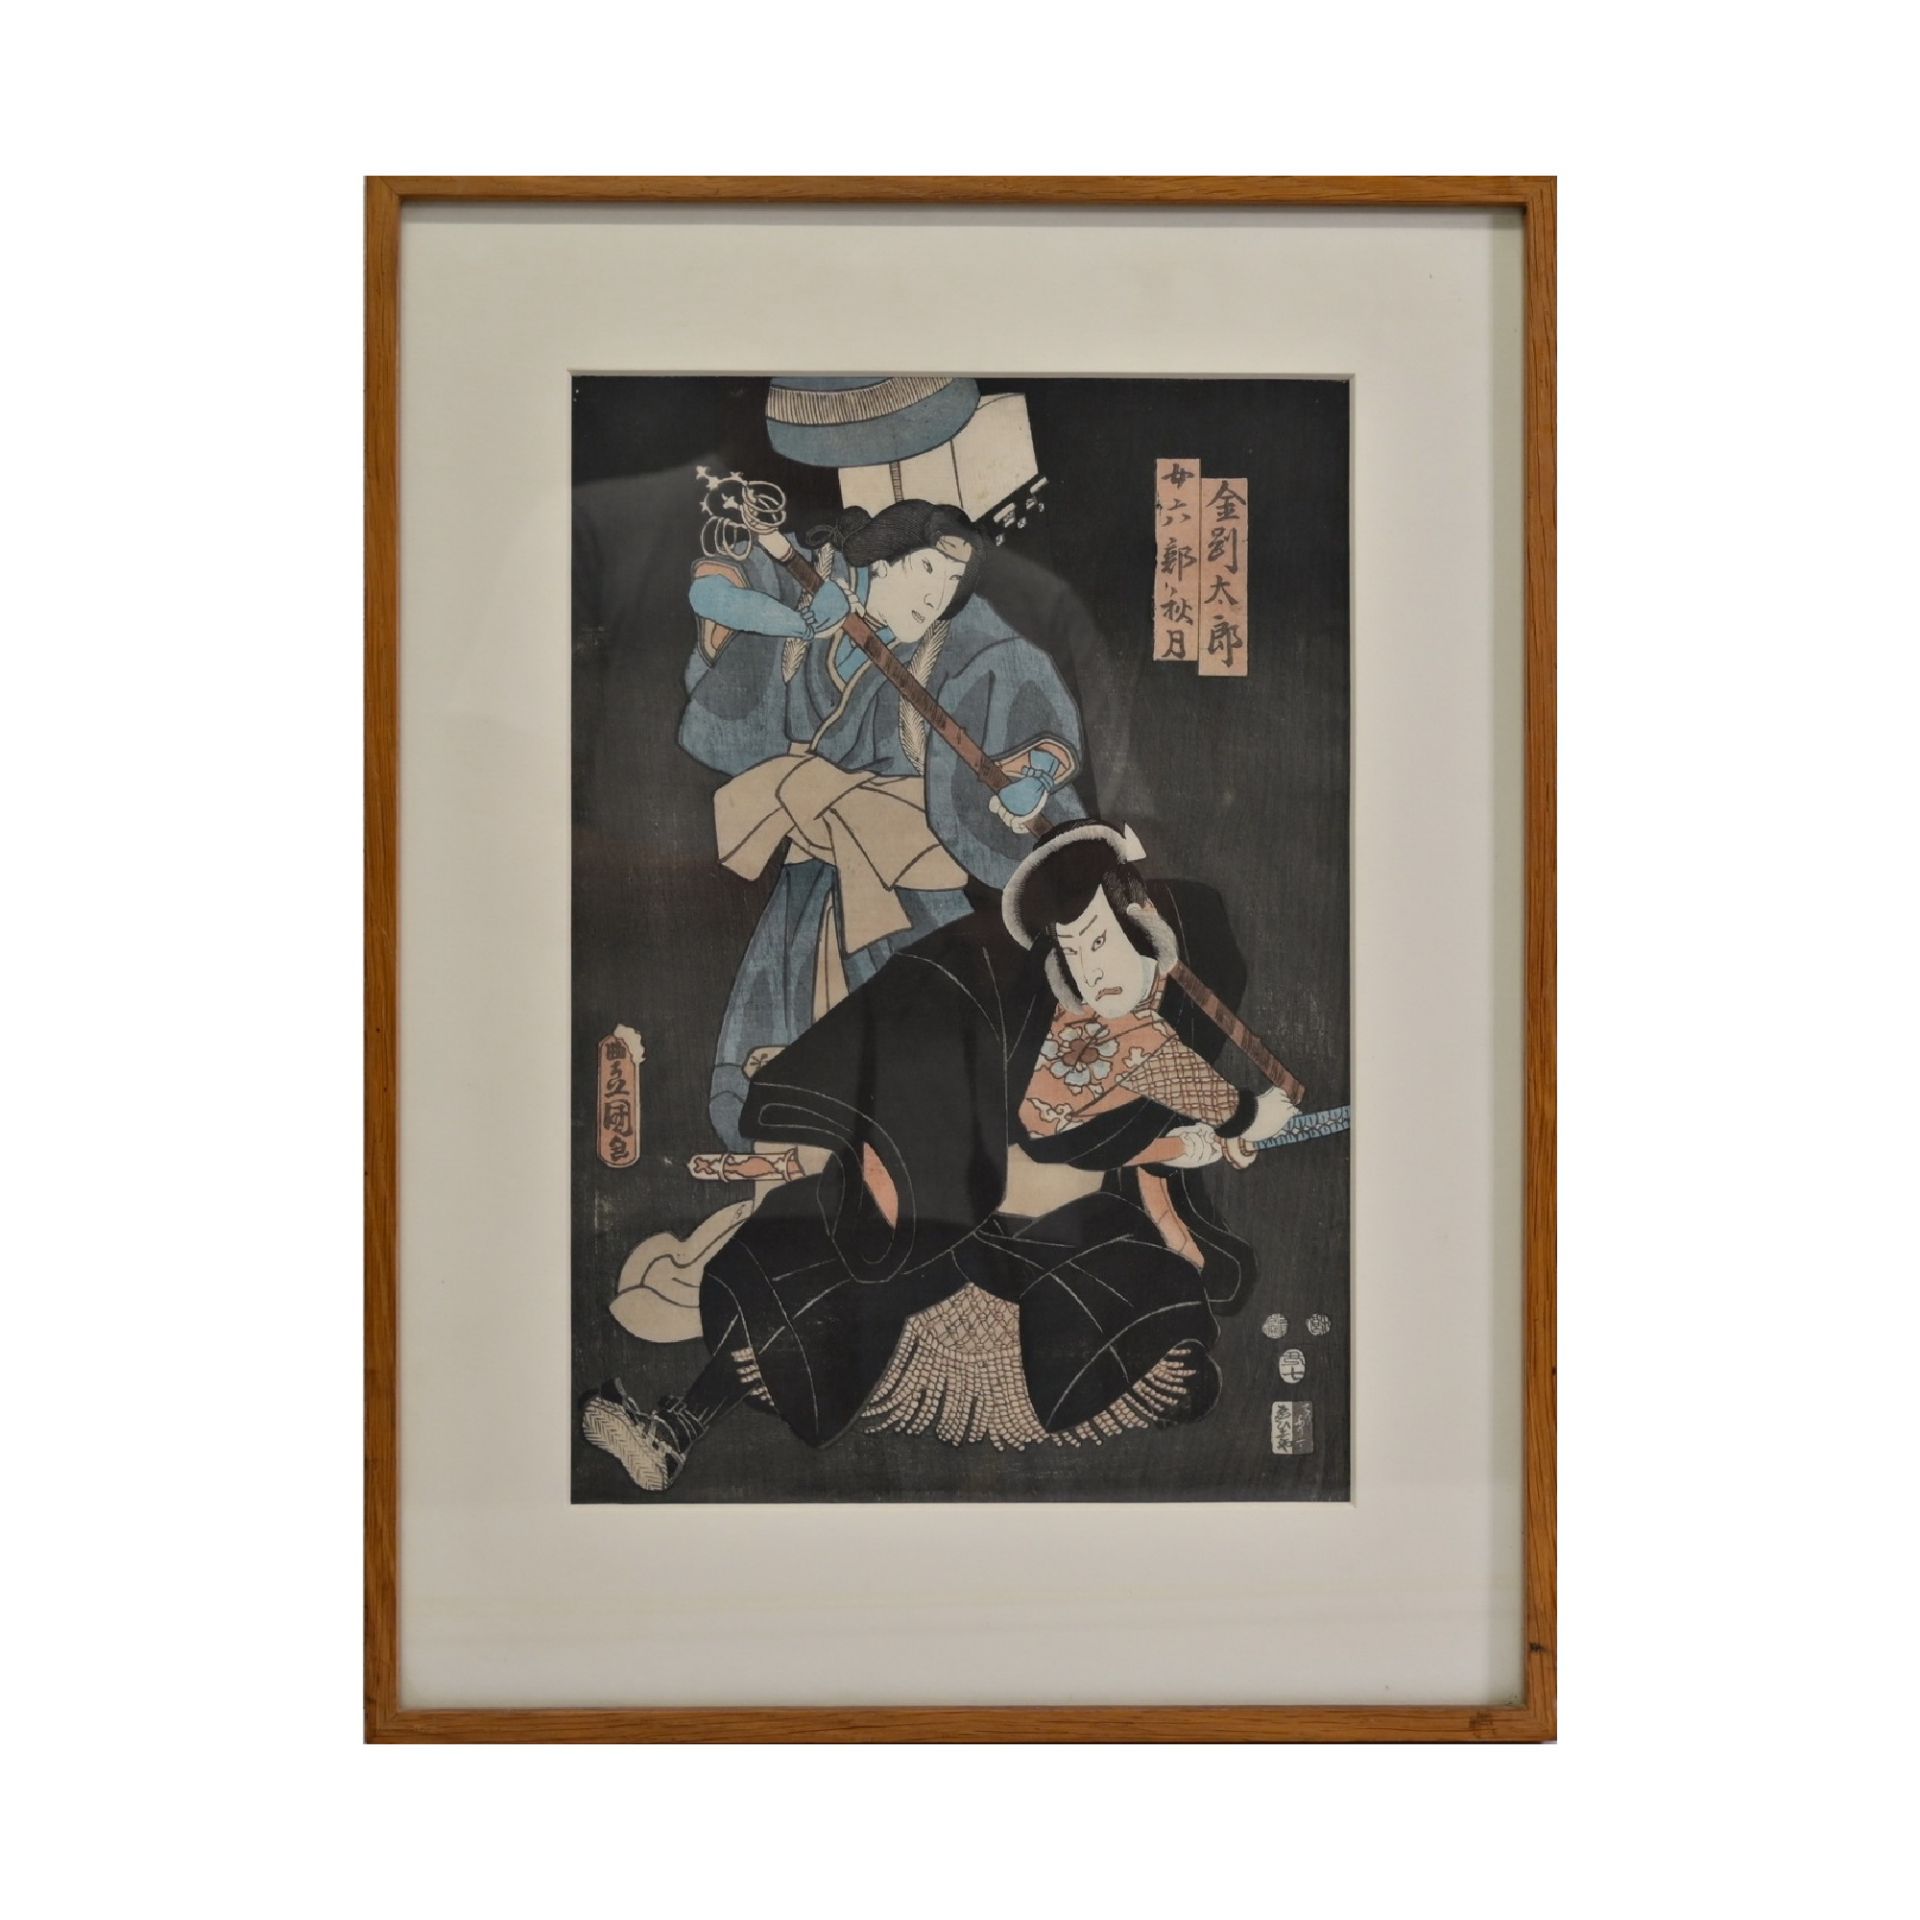 Kunisada Toyokuni (1786-1865), ÒTwo SamuraiÓ 1851, print. Japanese art of the 19th century.